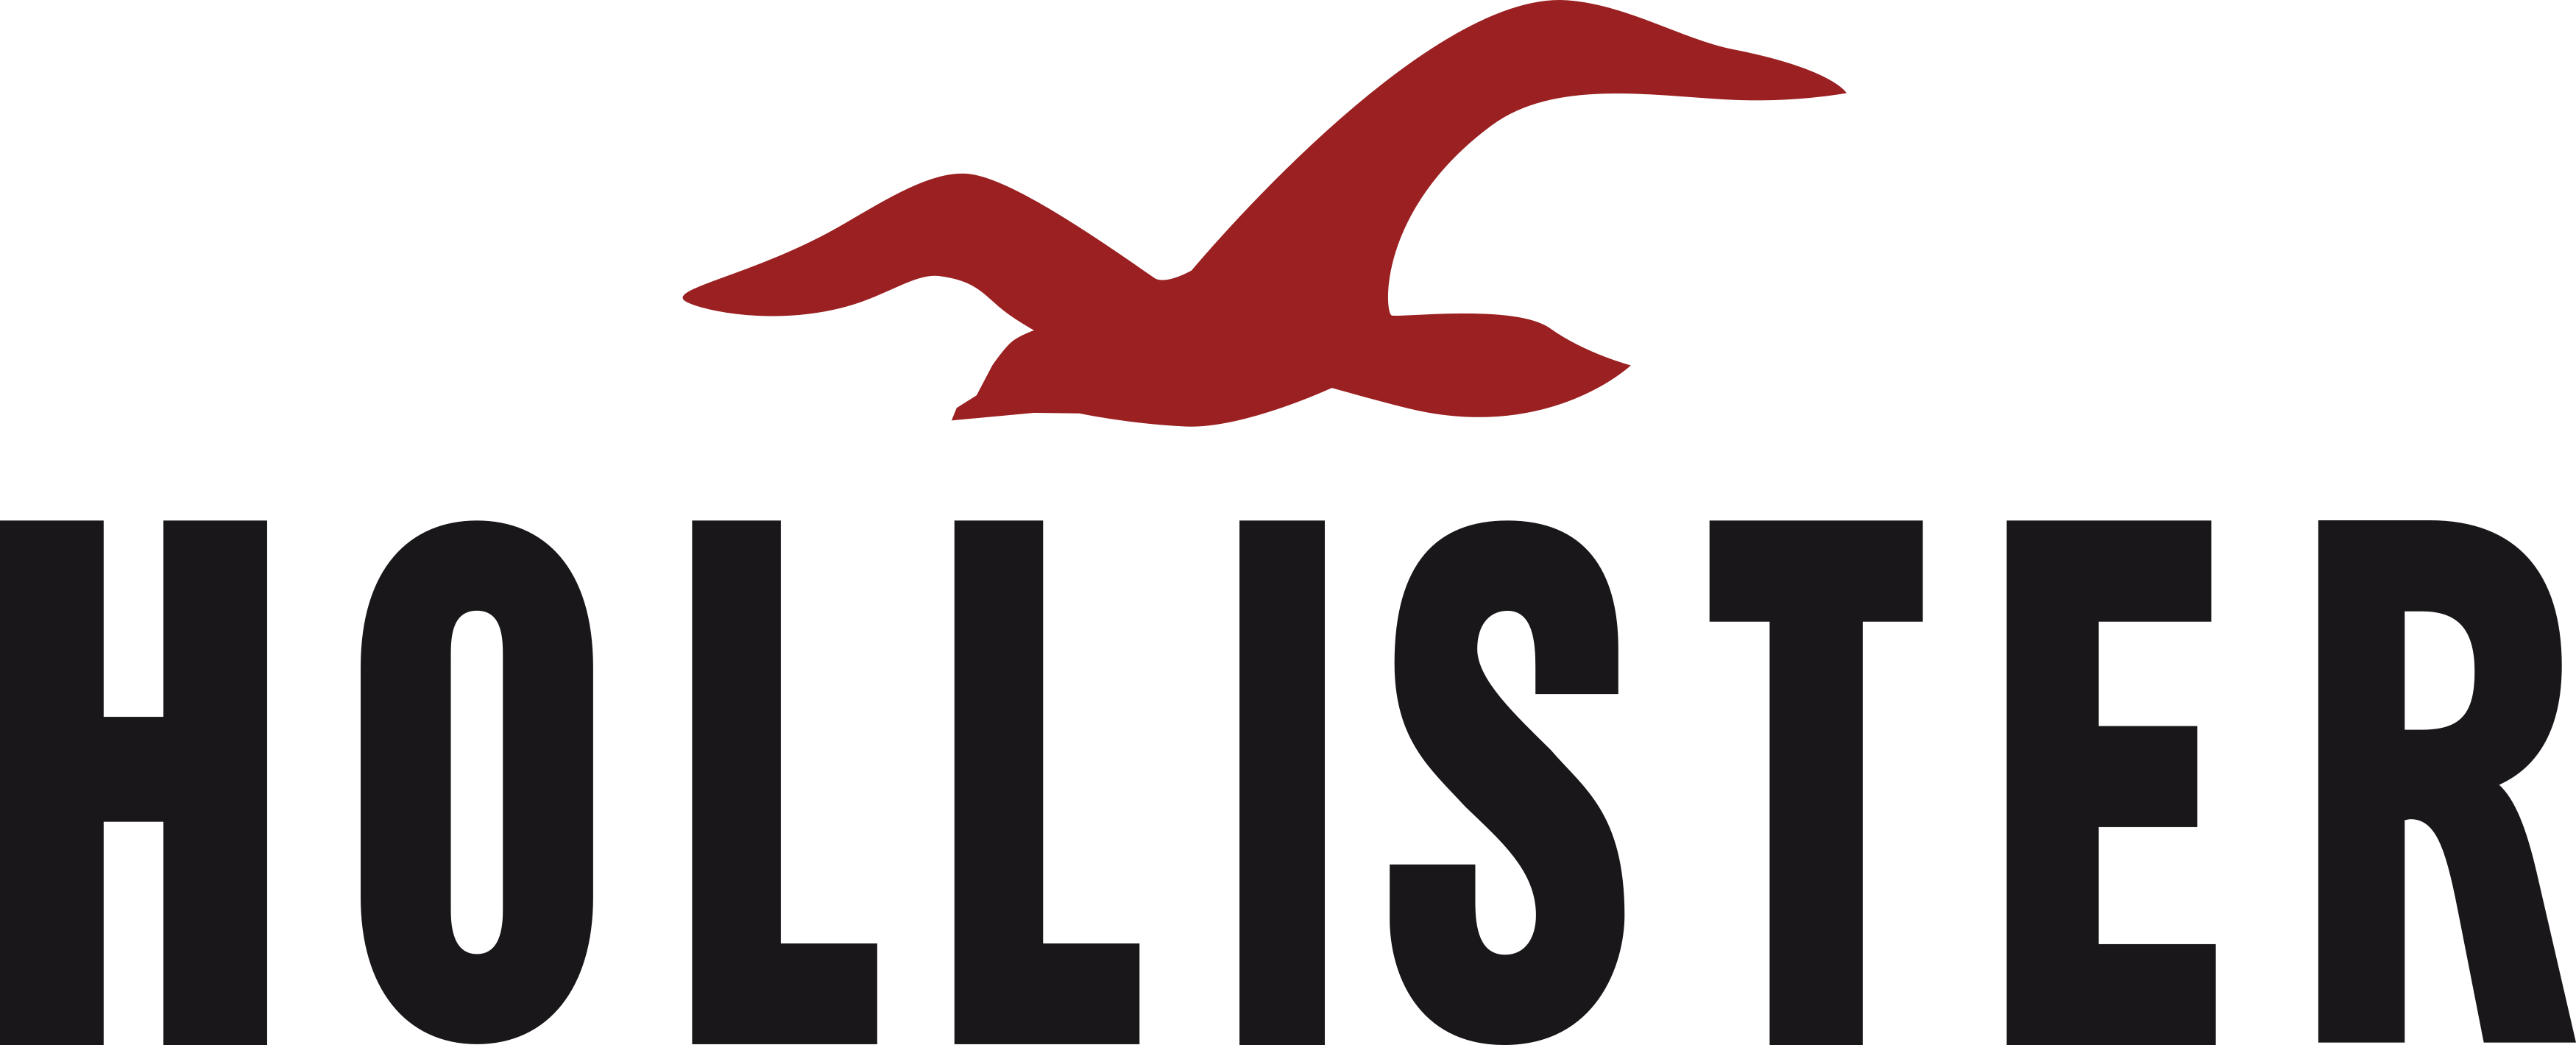 Hollister Co. Logo - PNG e Vetor - Download de Logo